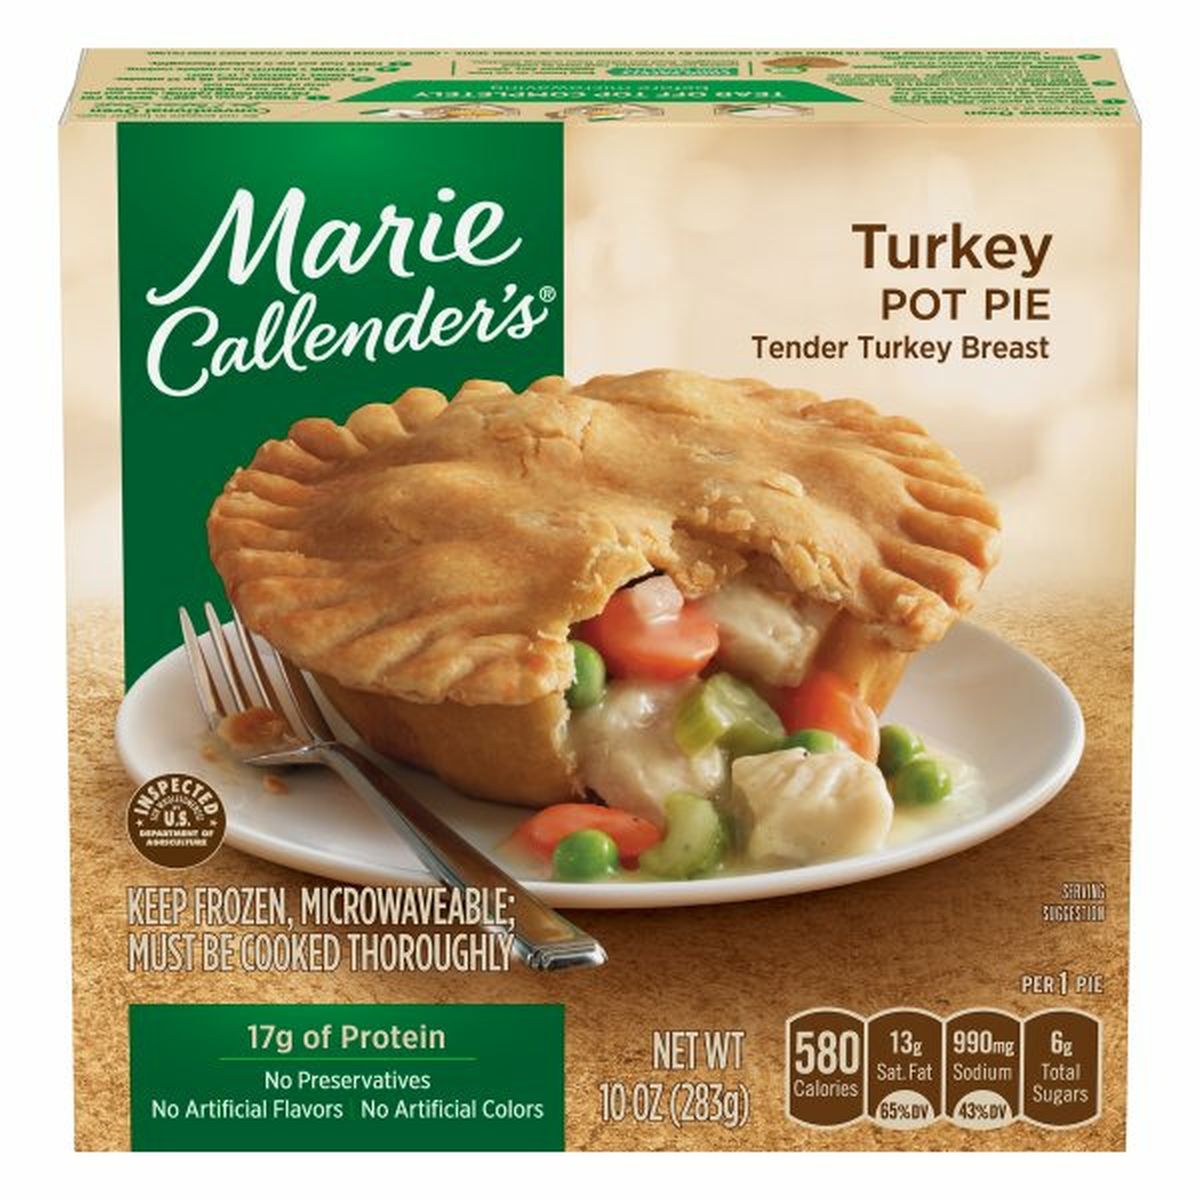 Calories in Marie Callender's Pot Pie, Turkey